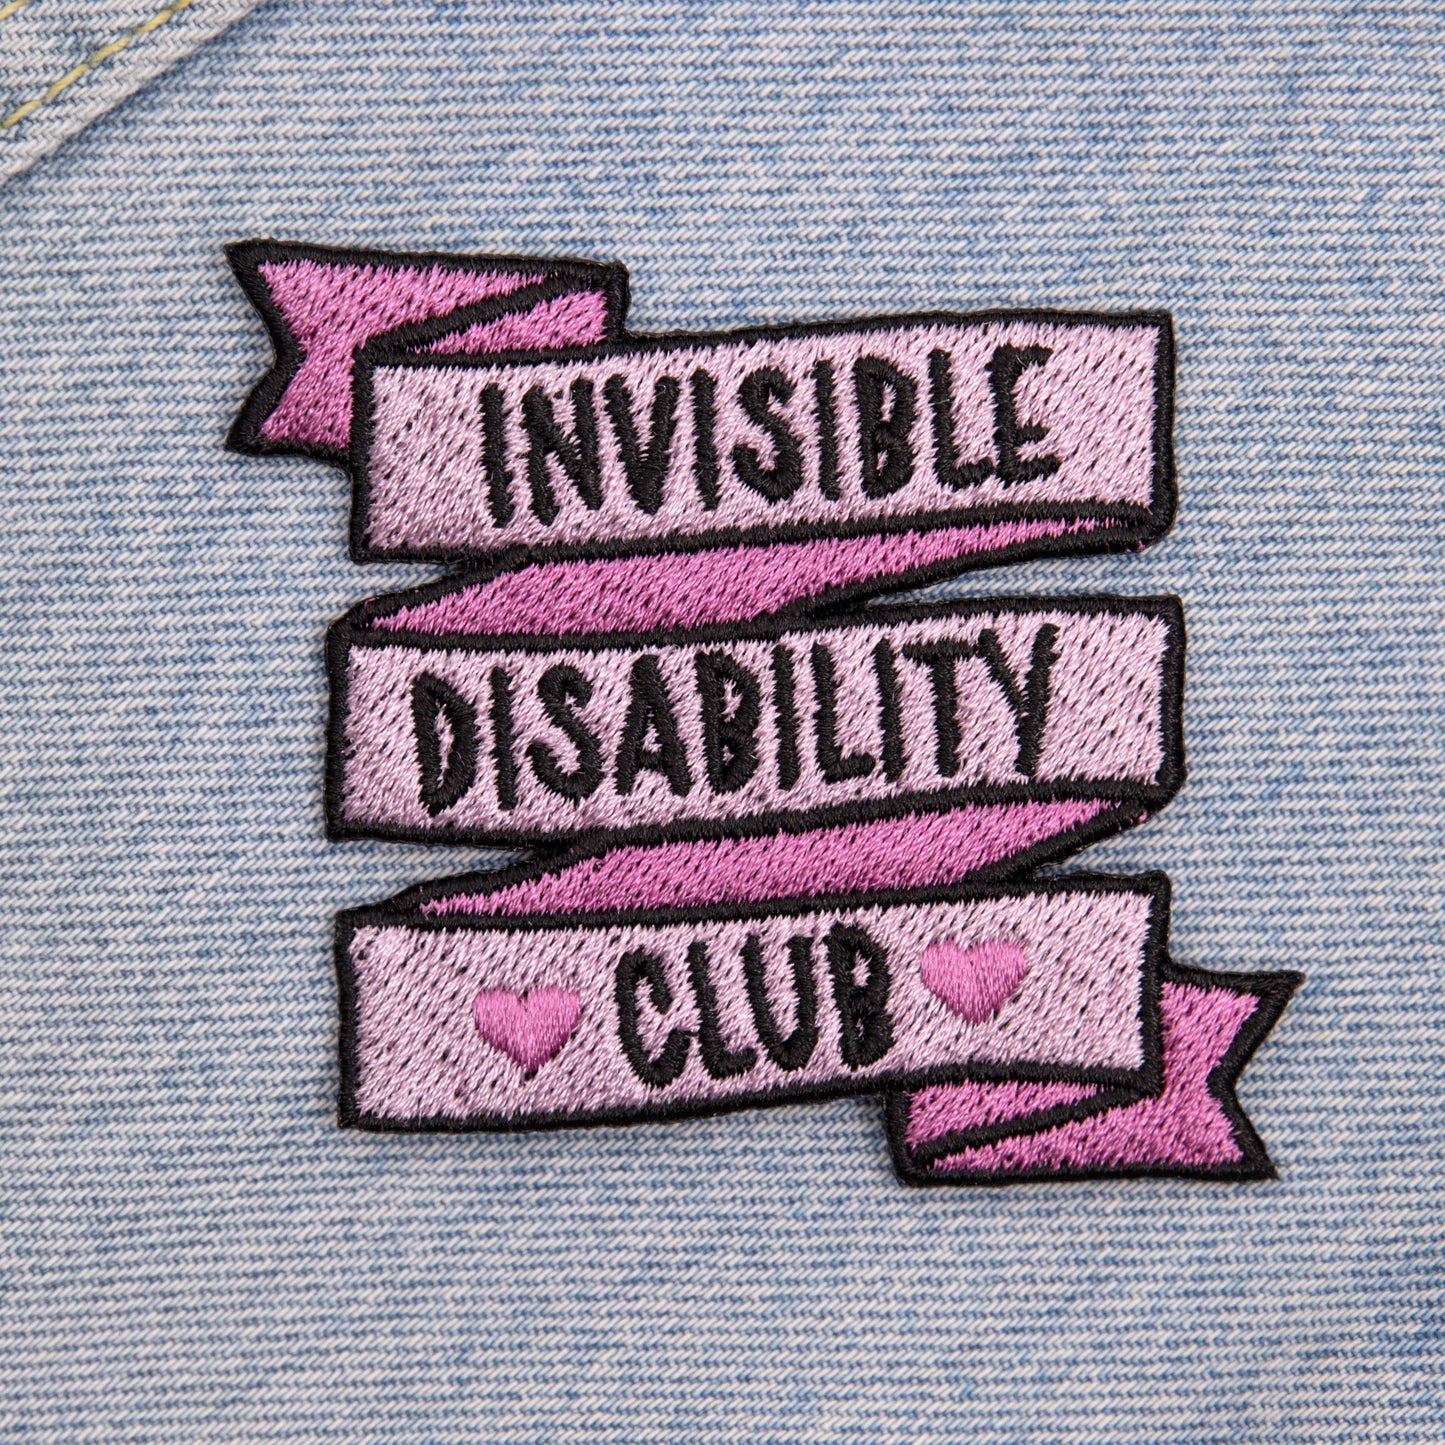 Invisible disability club ribbon enamel pin